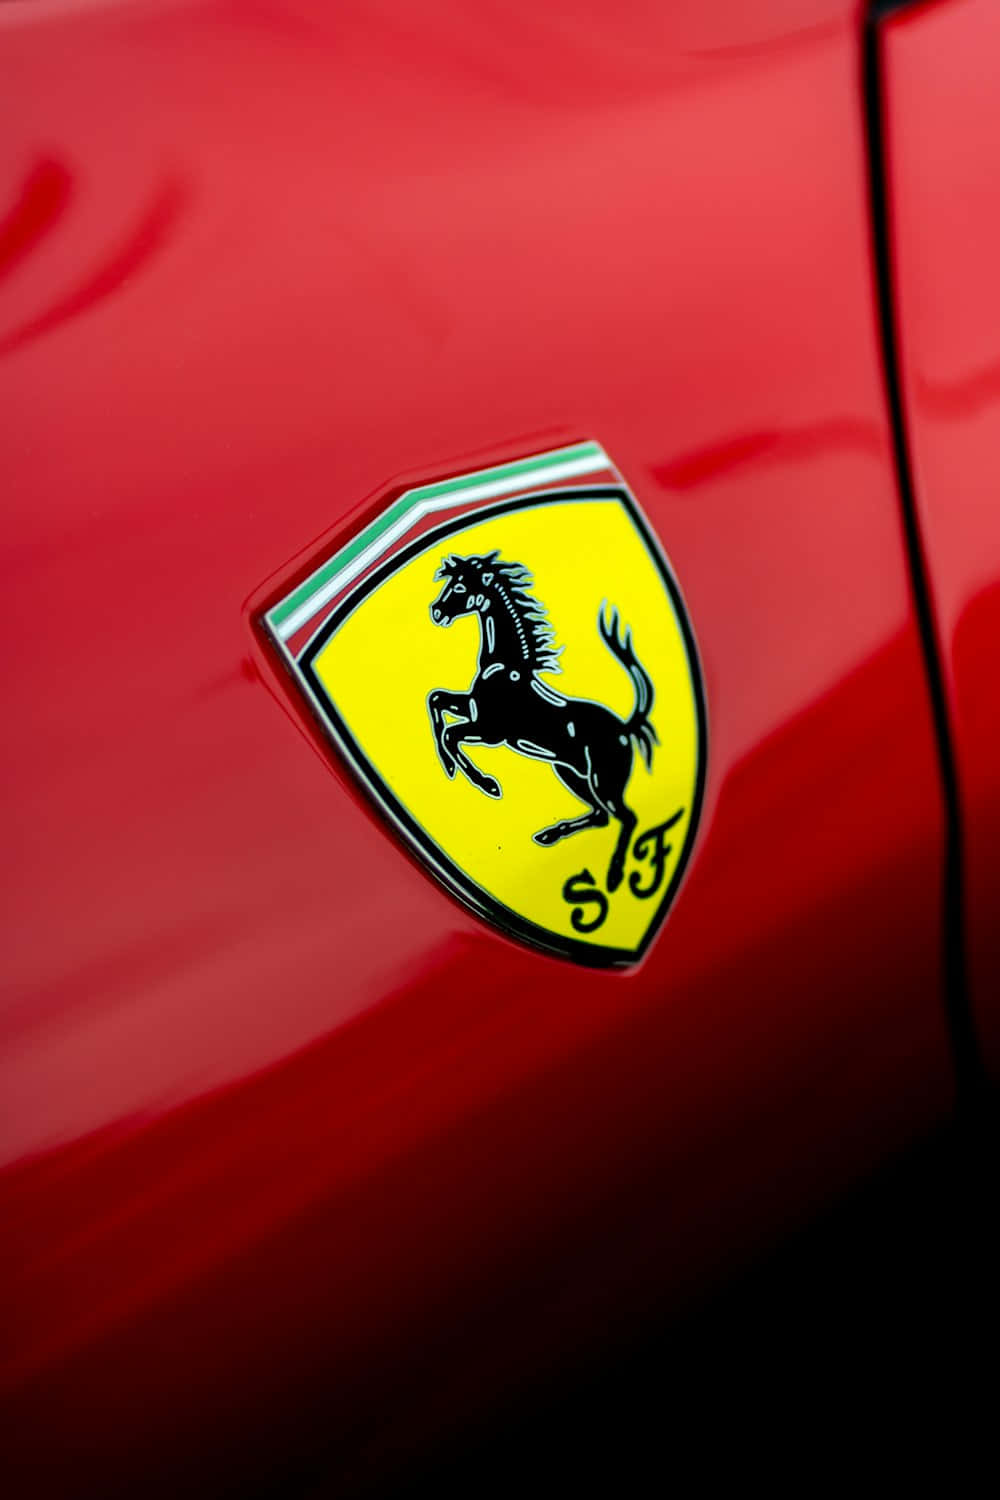 Ferrari Logo Closeup Red Background Wallpaper